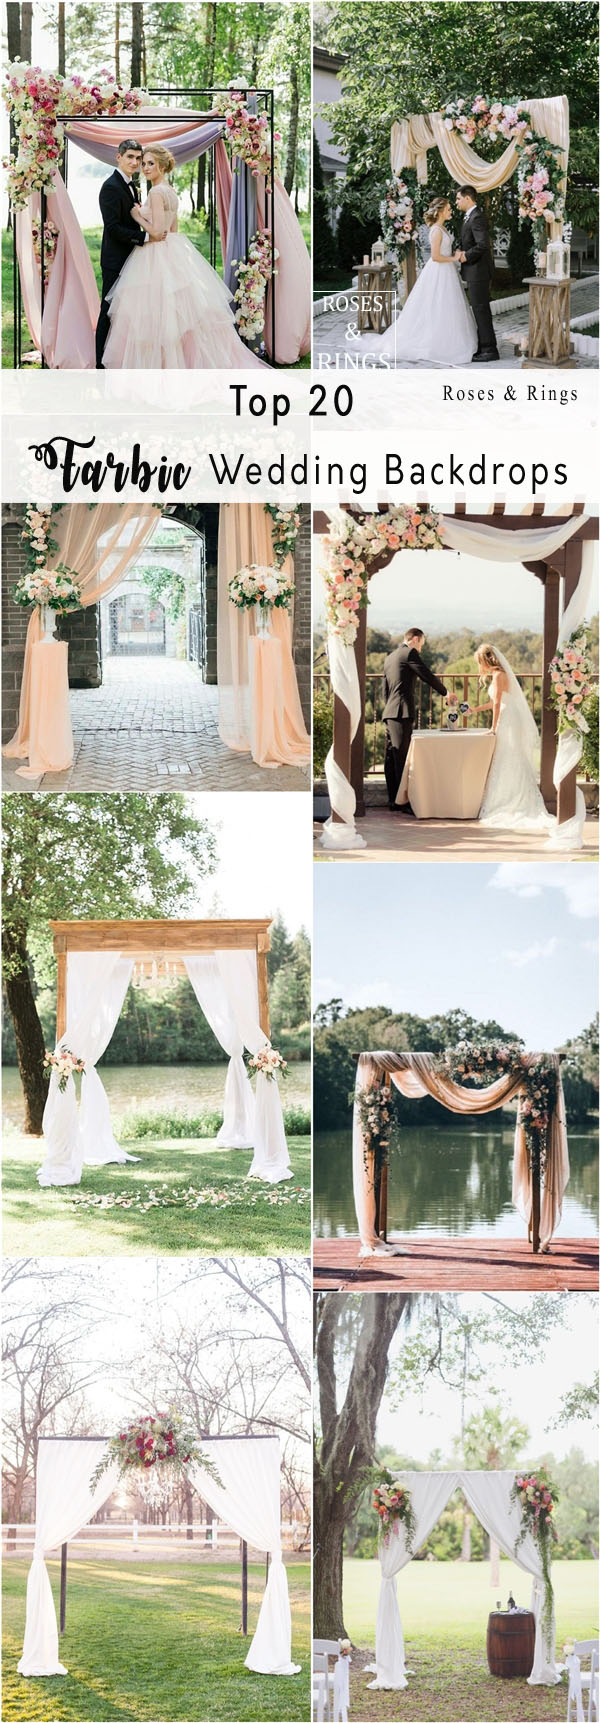 draped wedding canopy and backdrop ideas